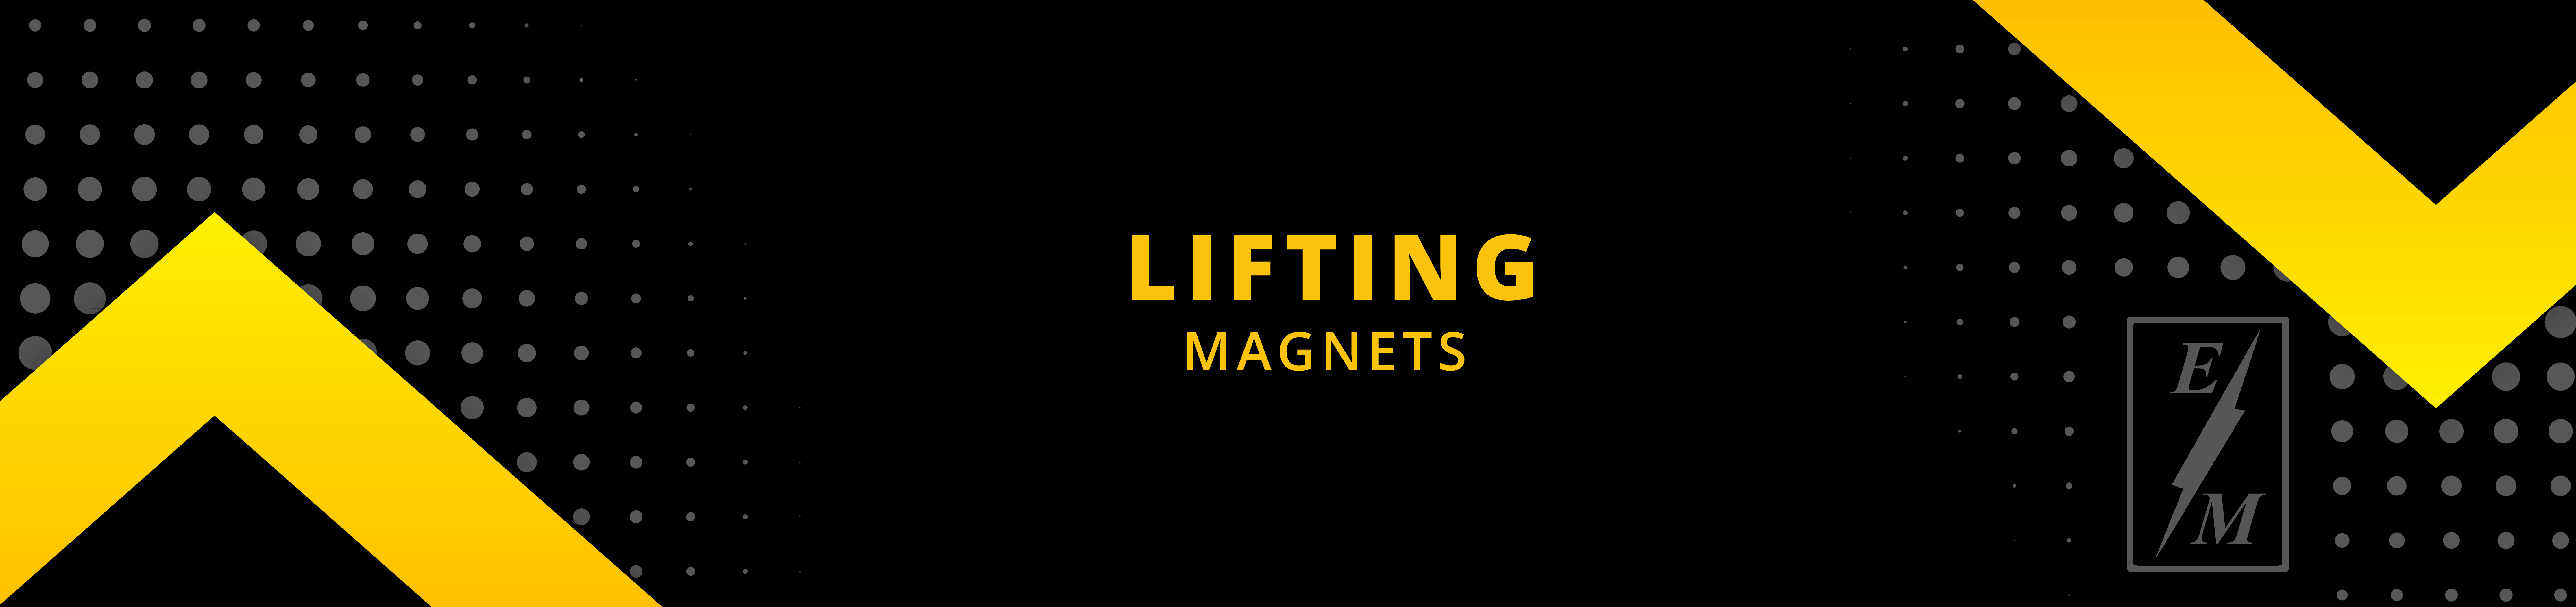 Lifting_Magnets